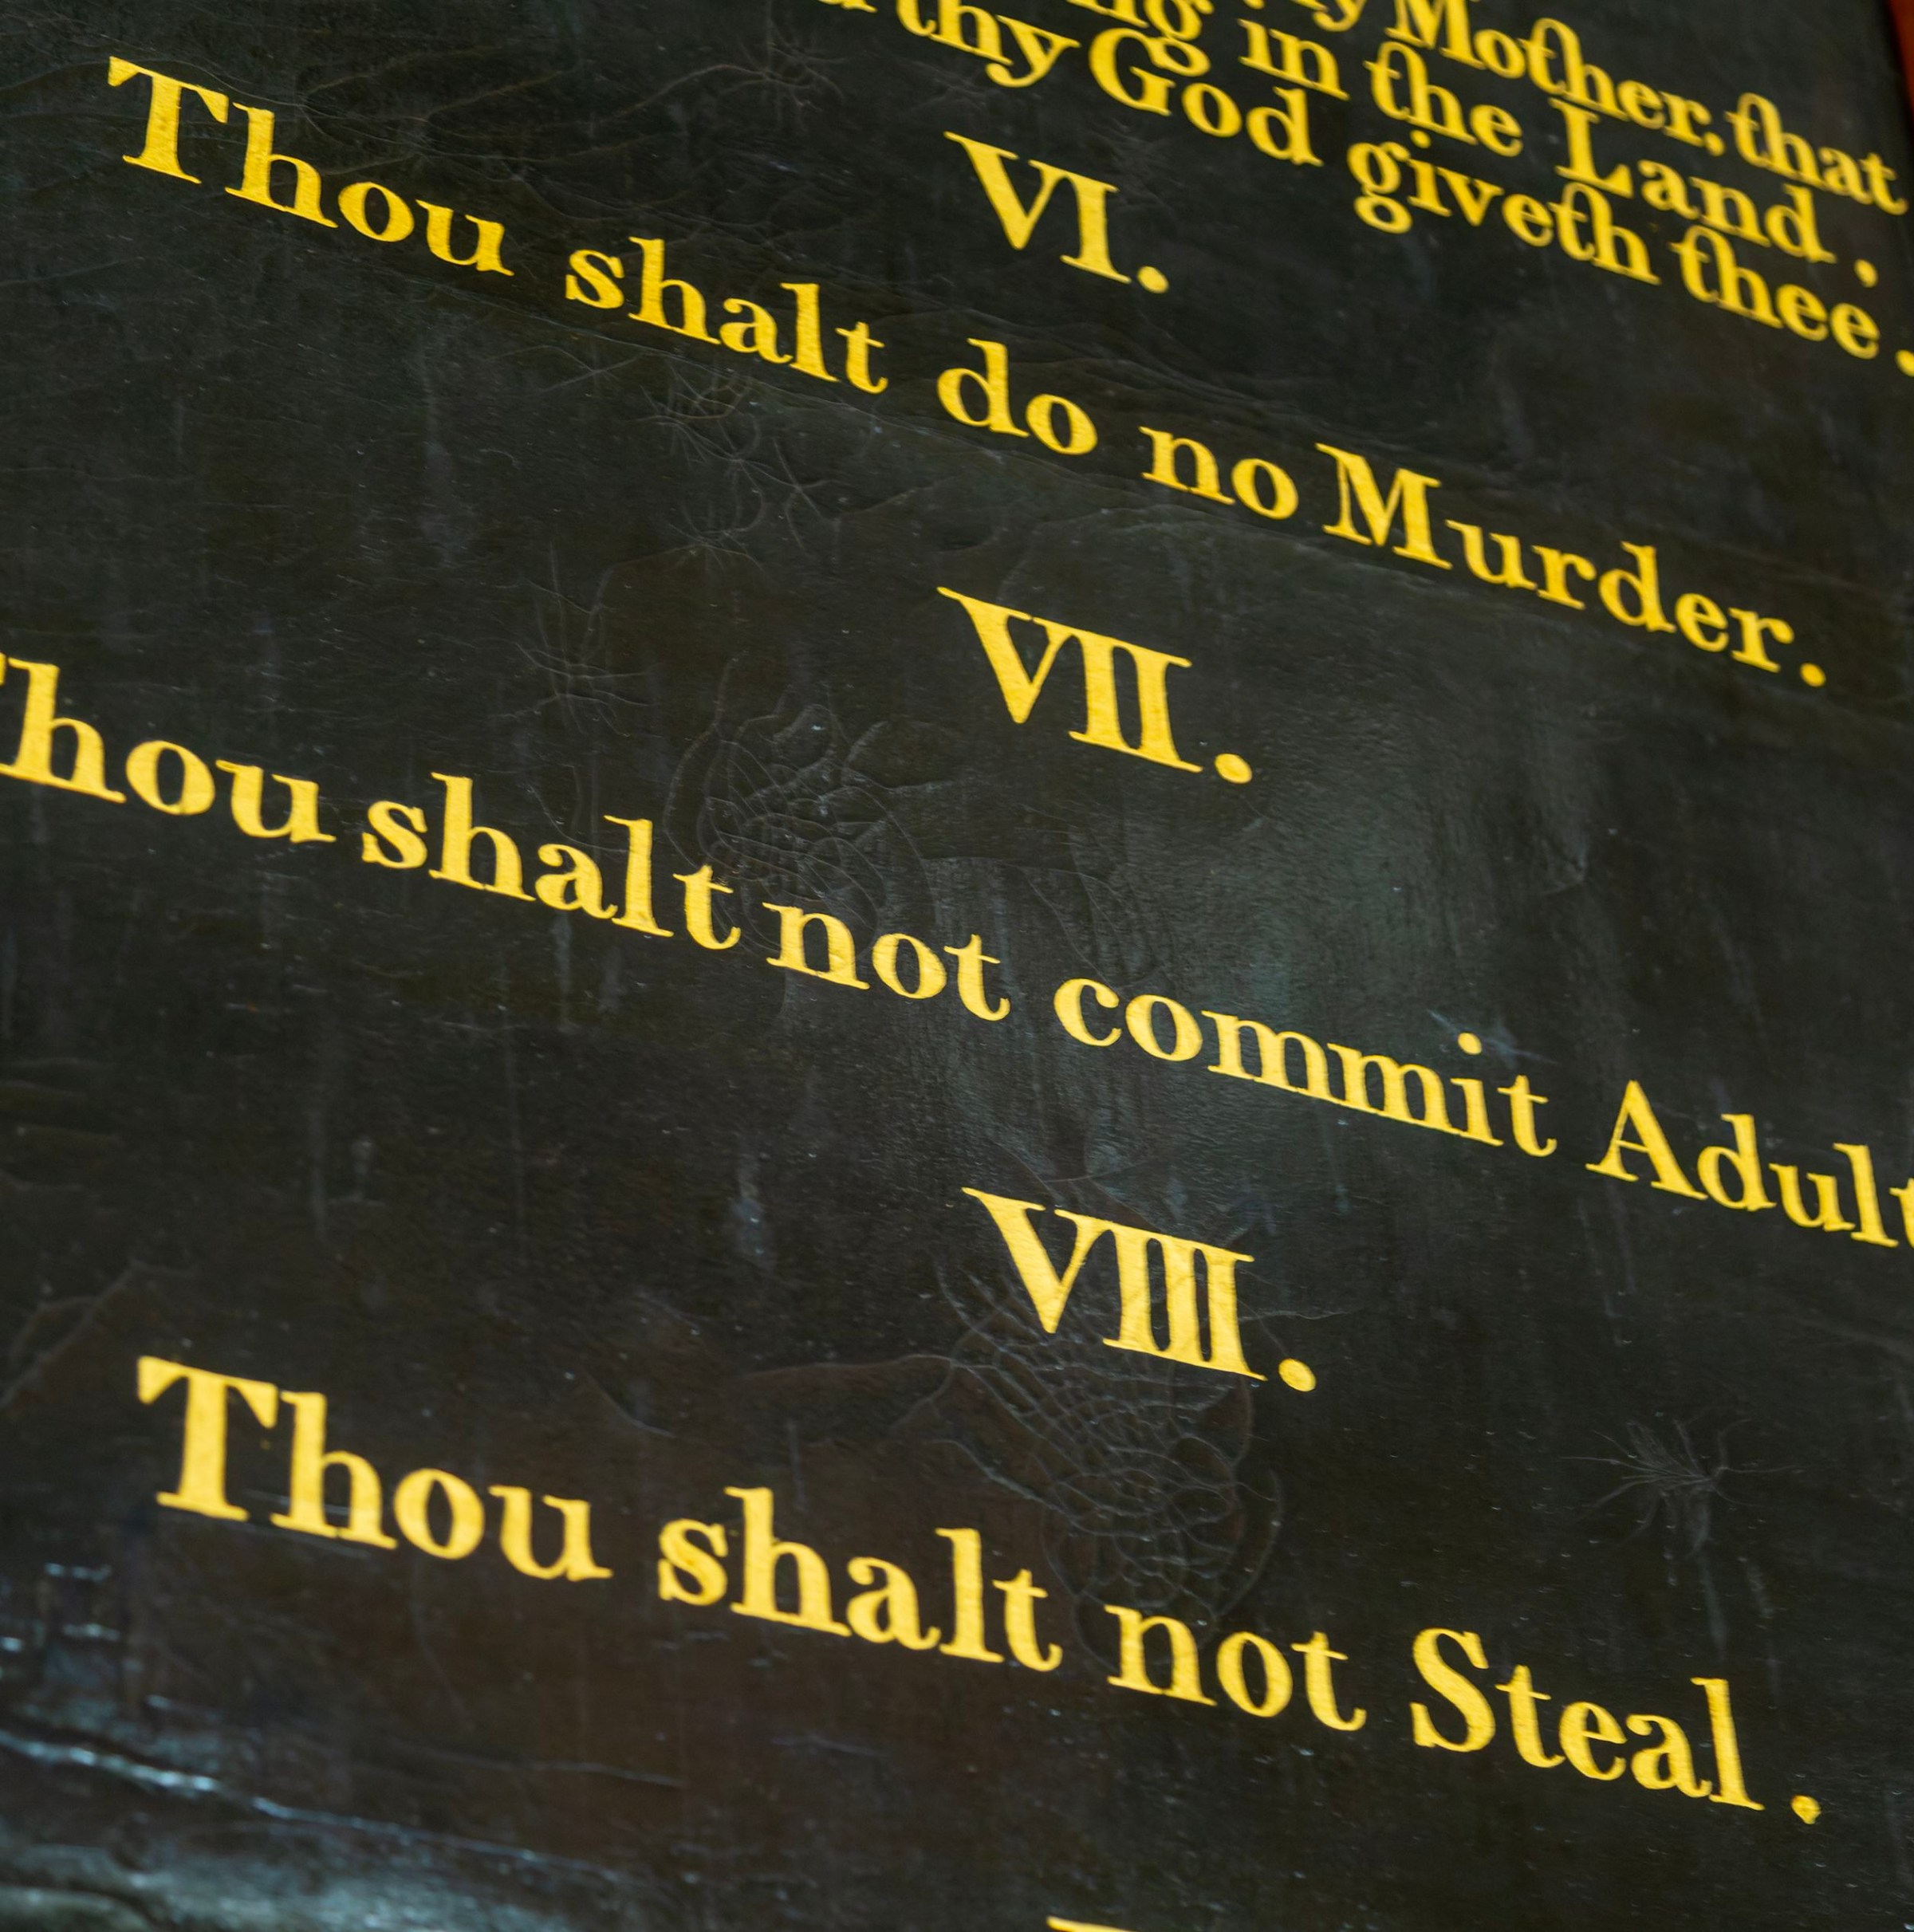 Louisiana wants the Ten Commandments in public schools. Will the Supreme Court let it?